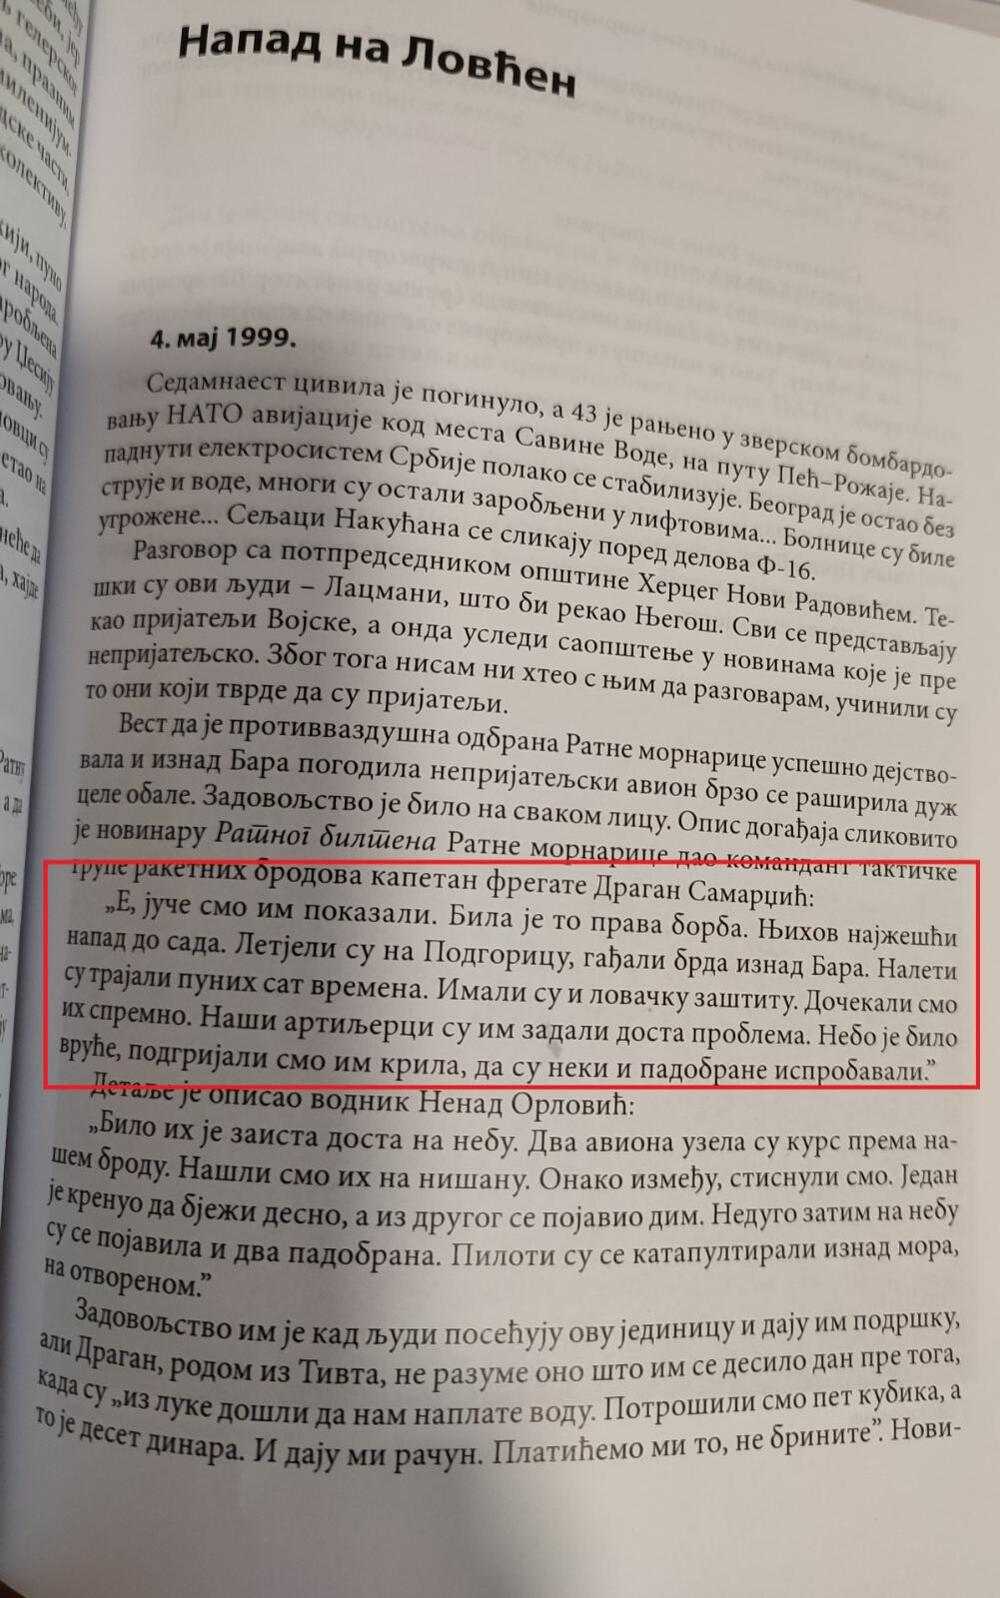 Dragan Samardžić tekst